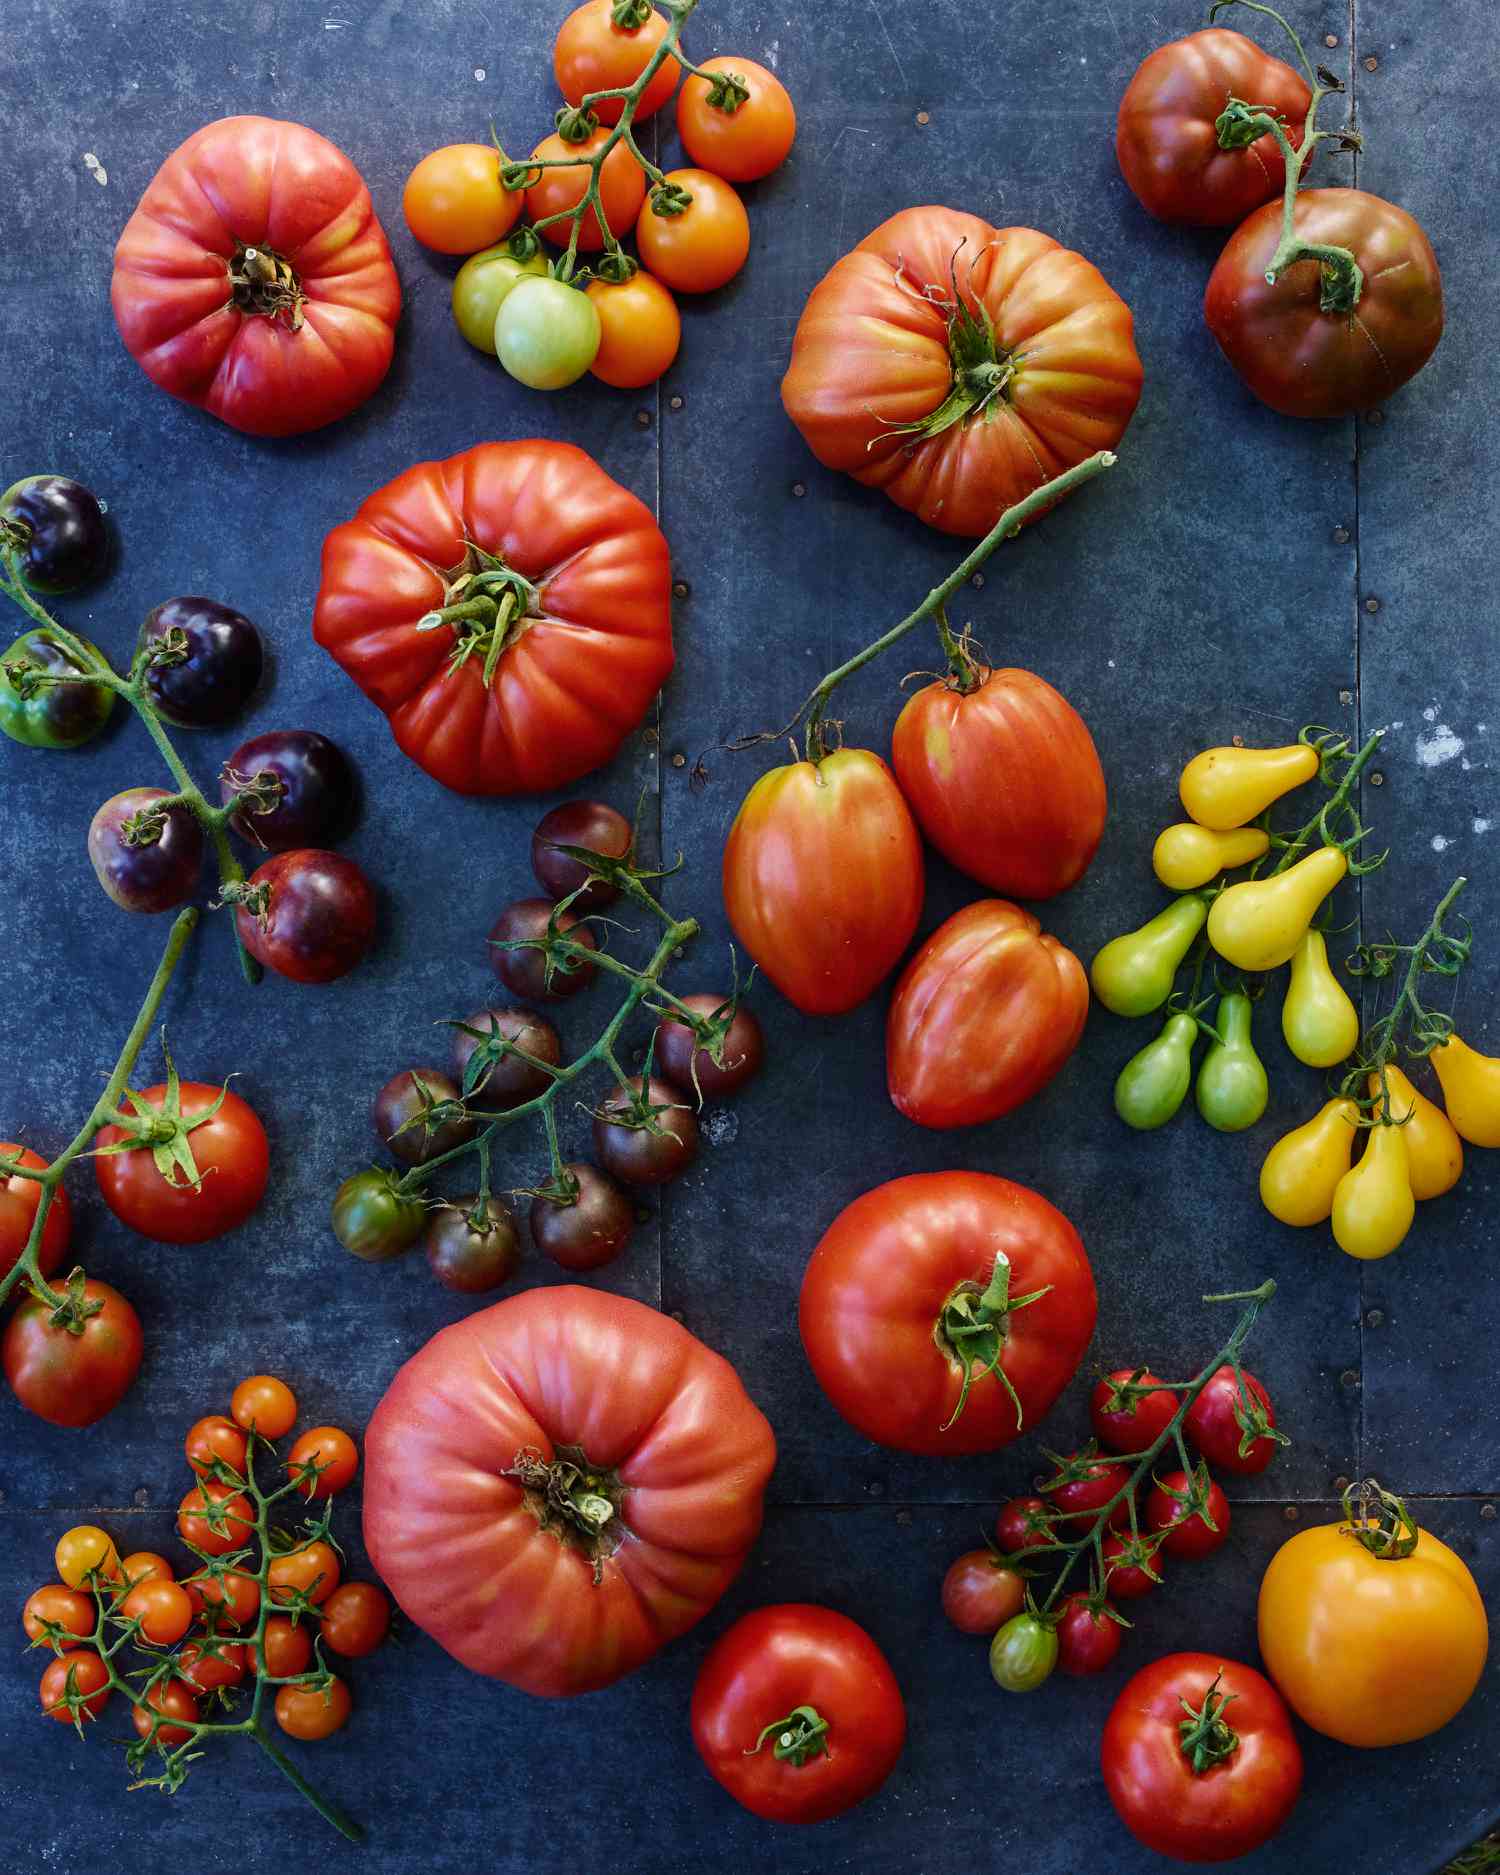 07-tomato-glossary-68582-d112503.jpg